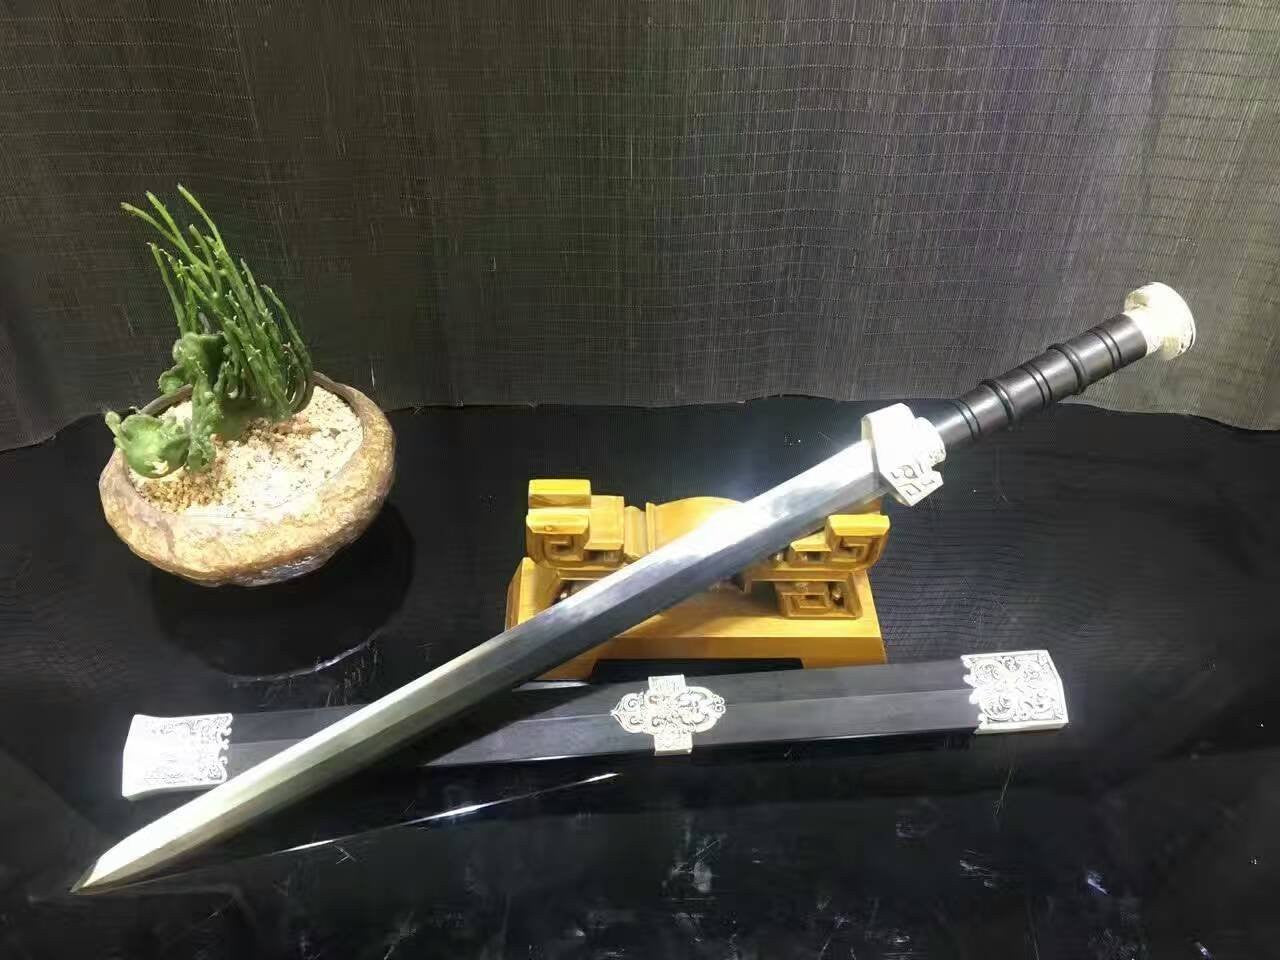 Qin jian sword/High carbon steel eight surface blade/Black wood/Length 31" - Chinese sword shop